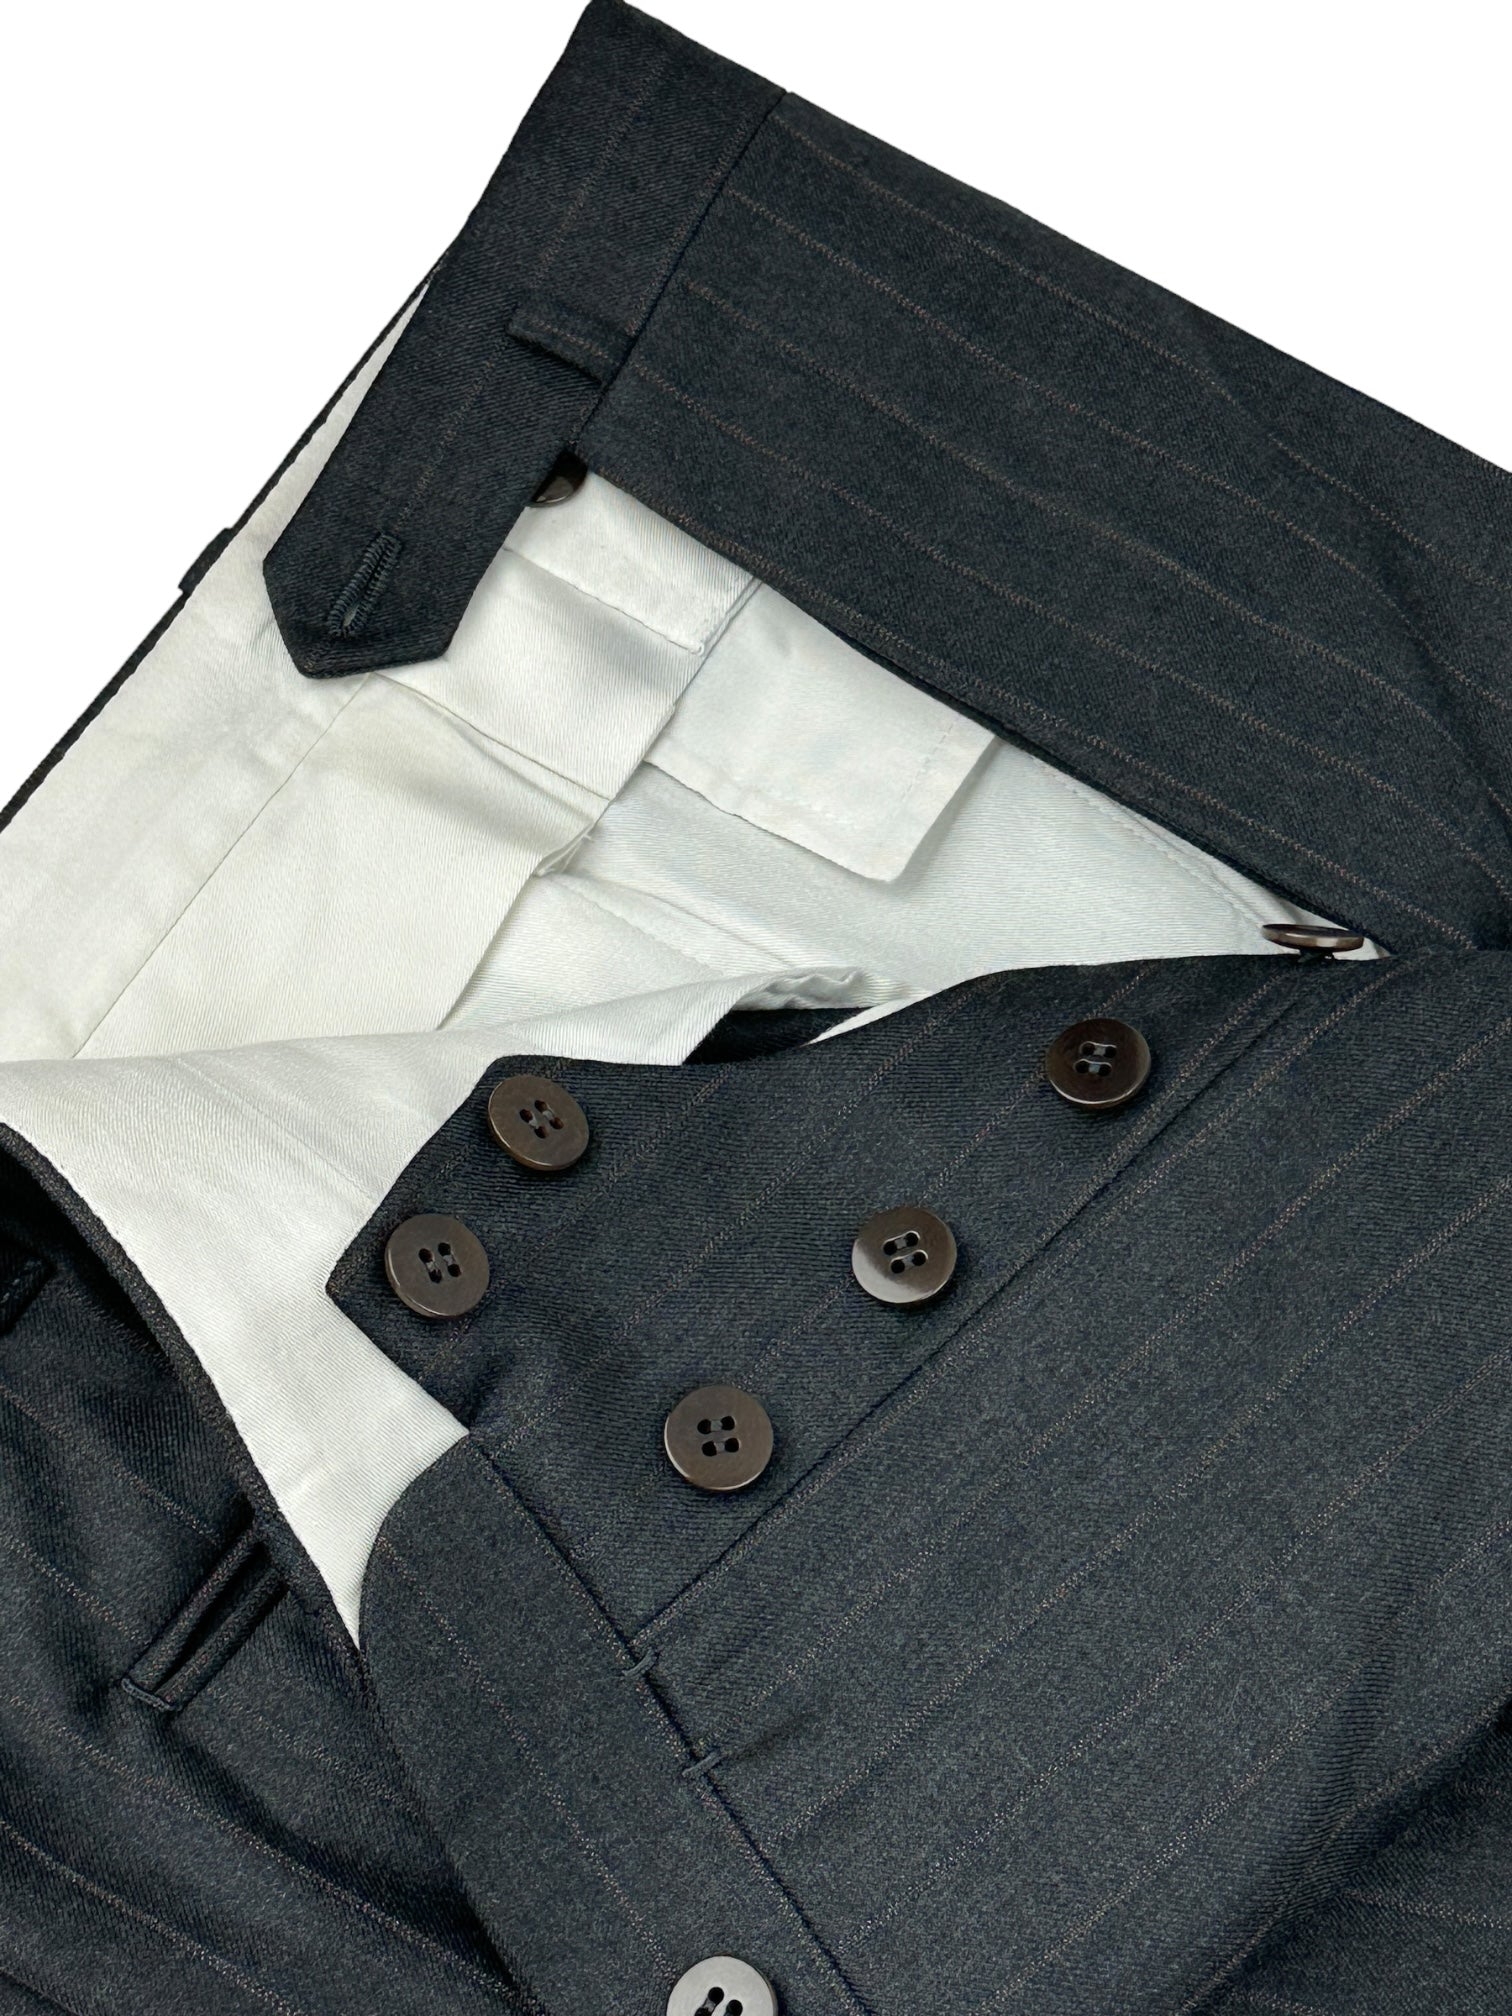 Cesare Attolini Super 130's Grey and Bronze Pinstripe Suit